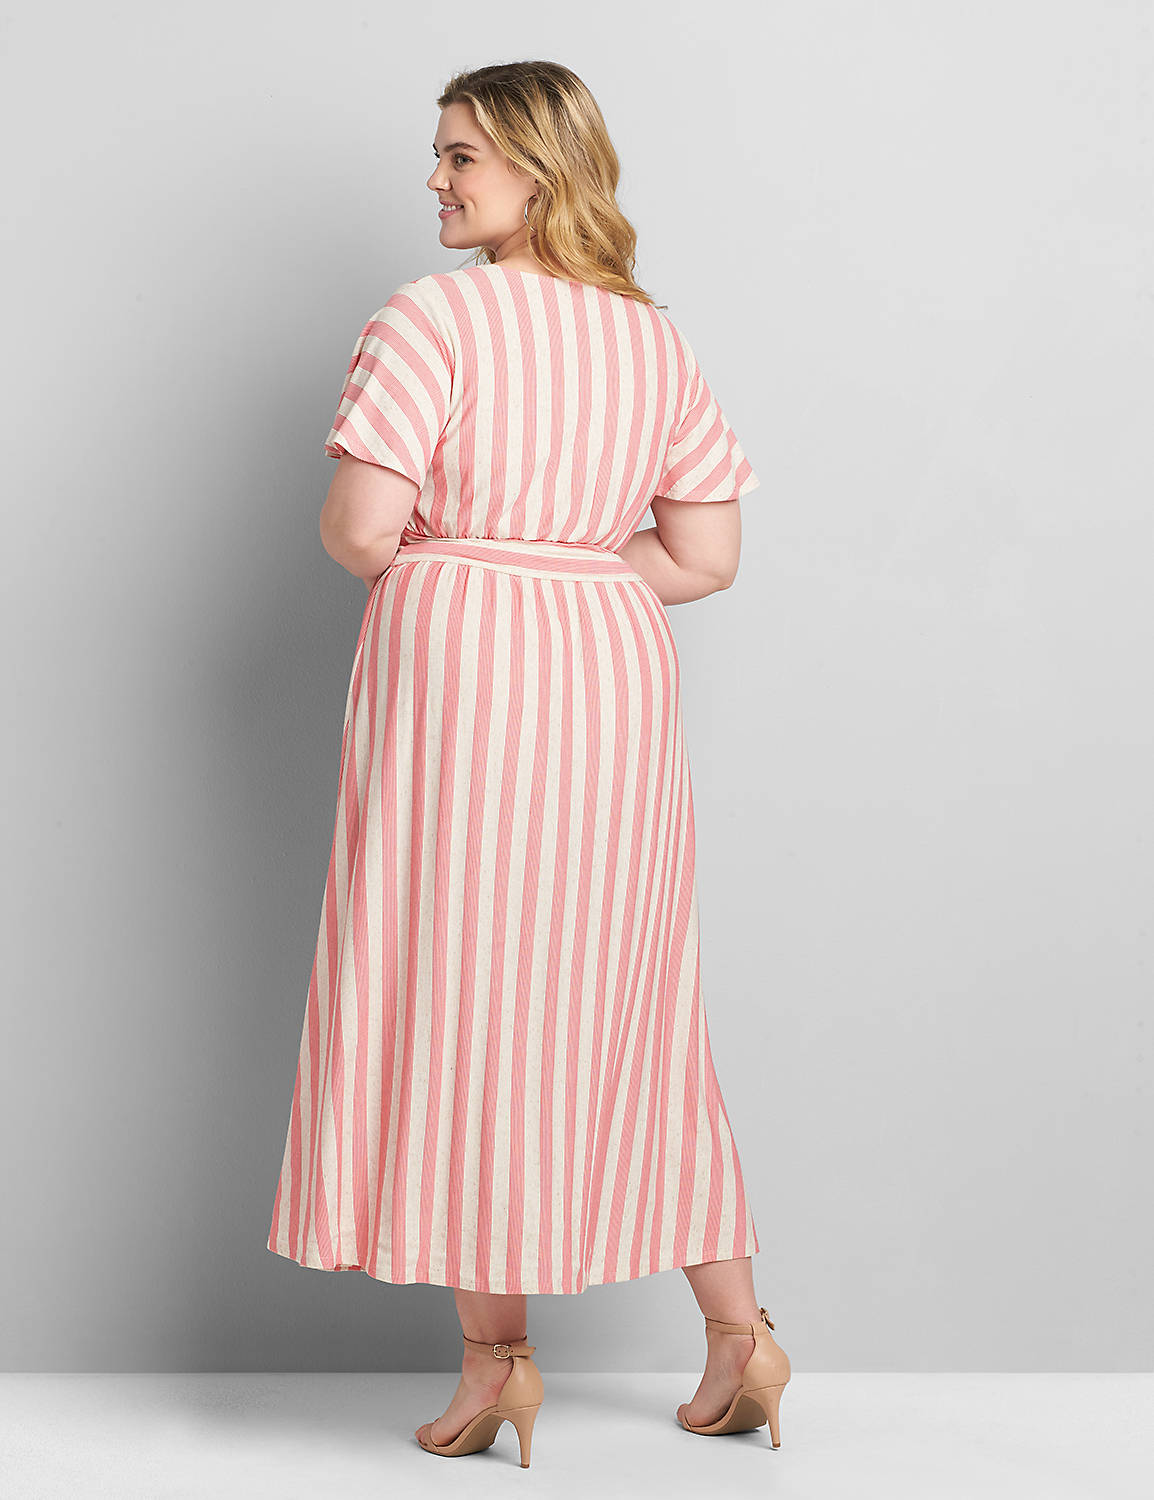 Short-Sleeve Chevron Stripe Maxi Dress Product Image 2